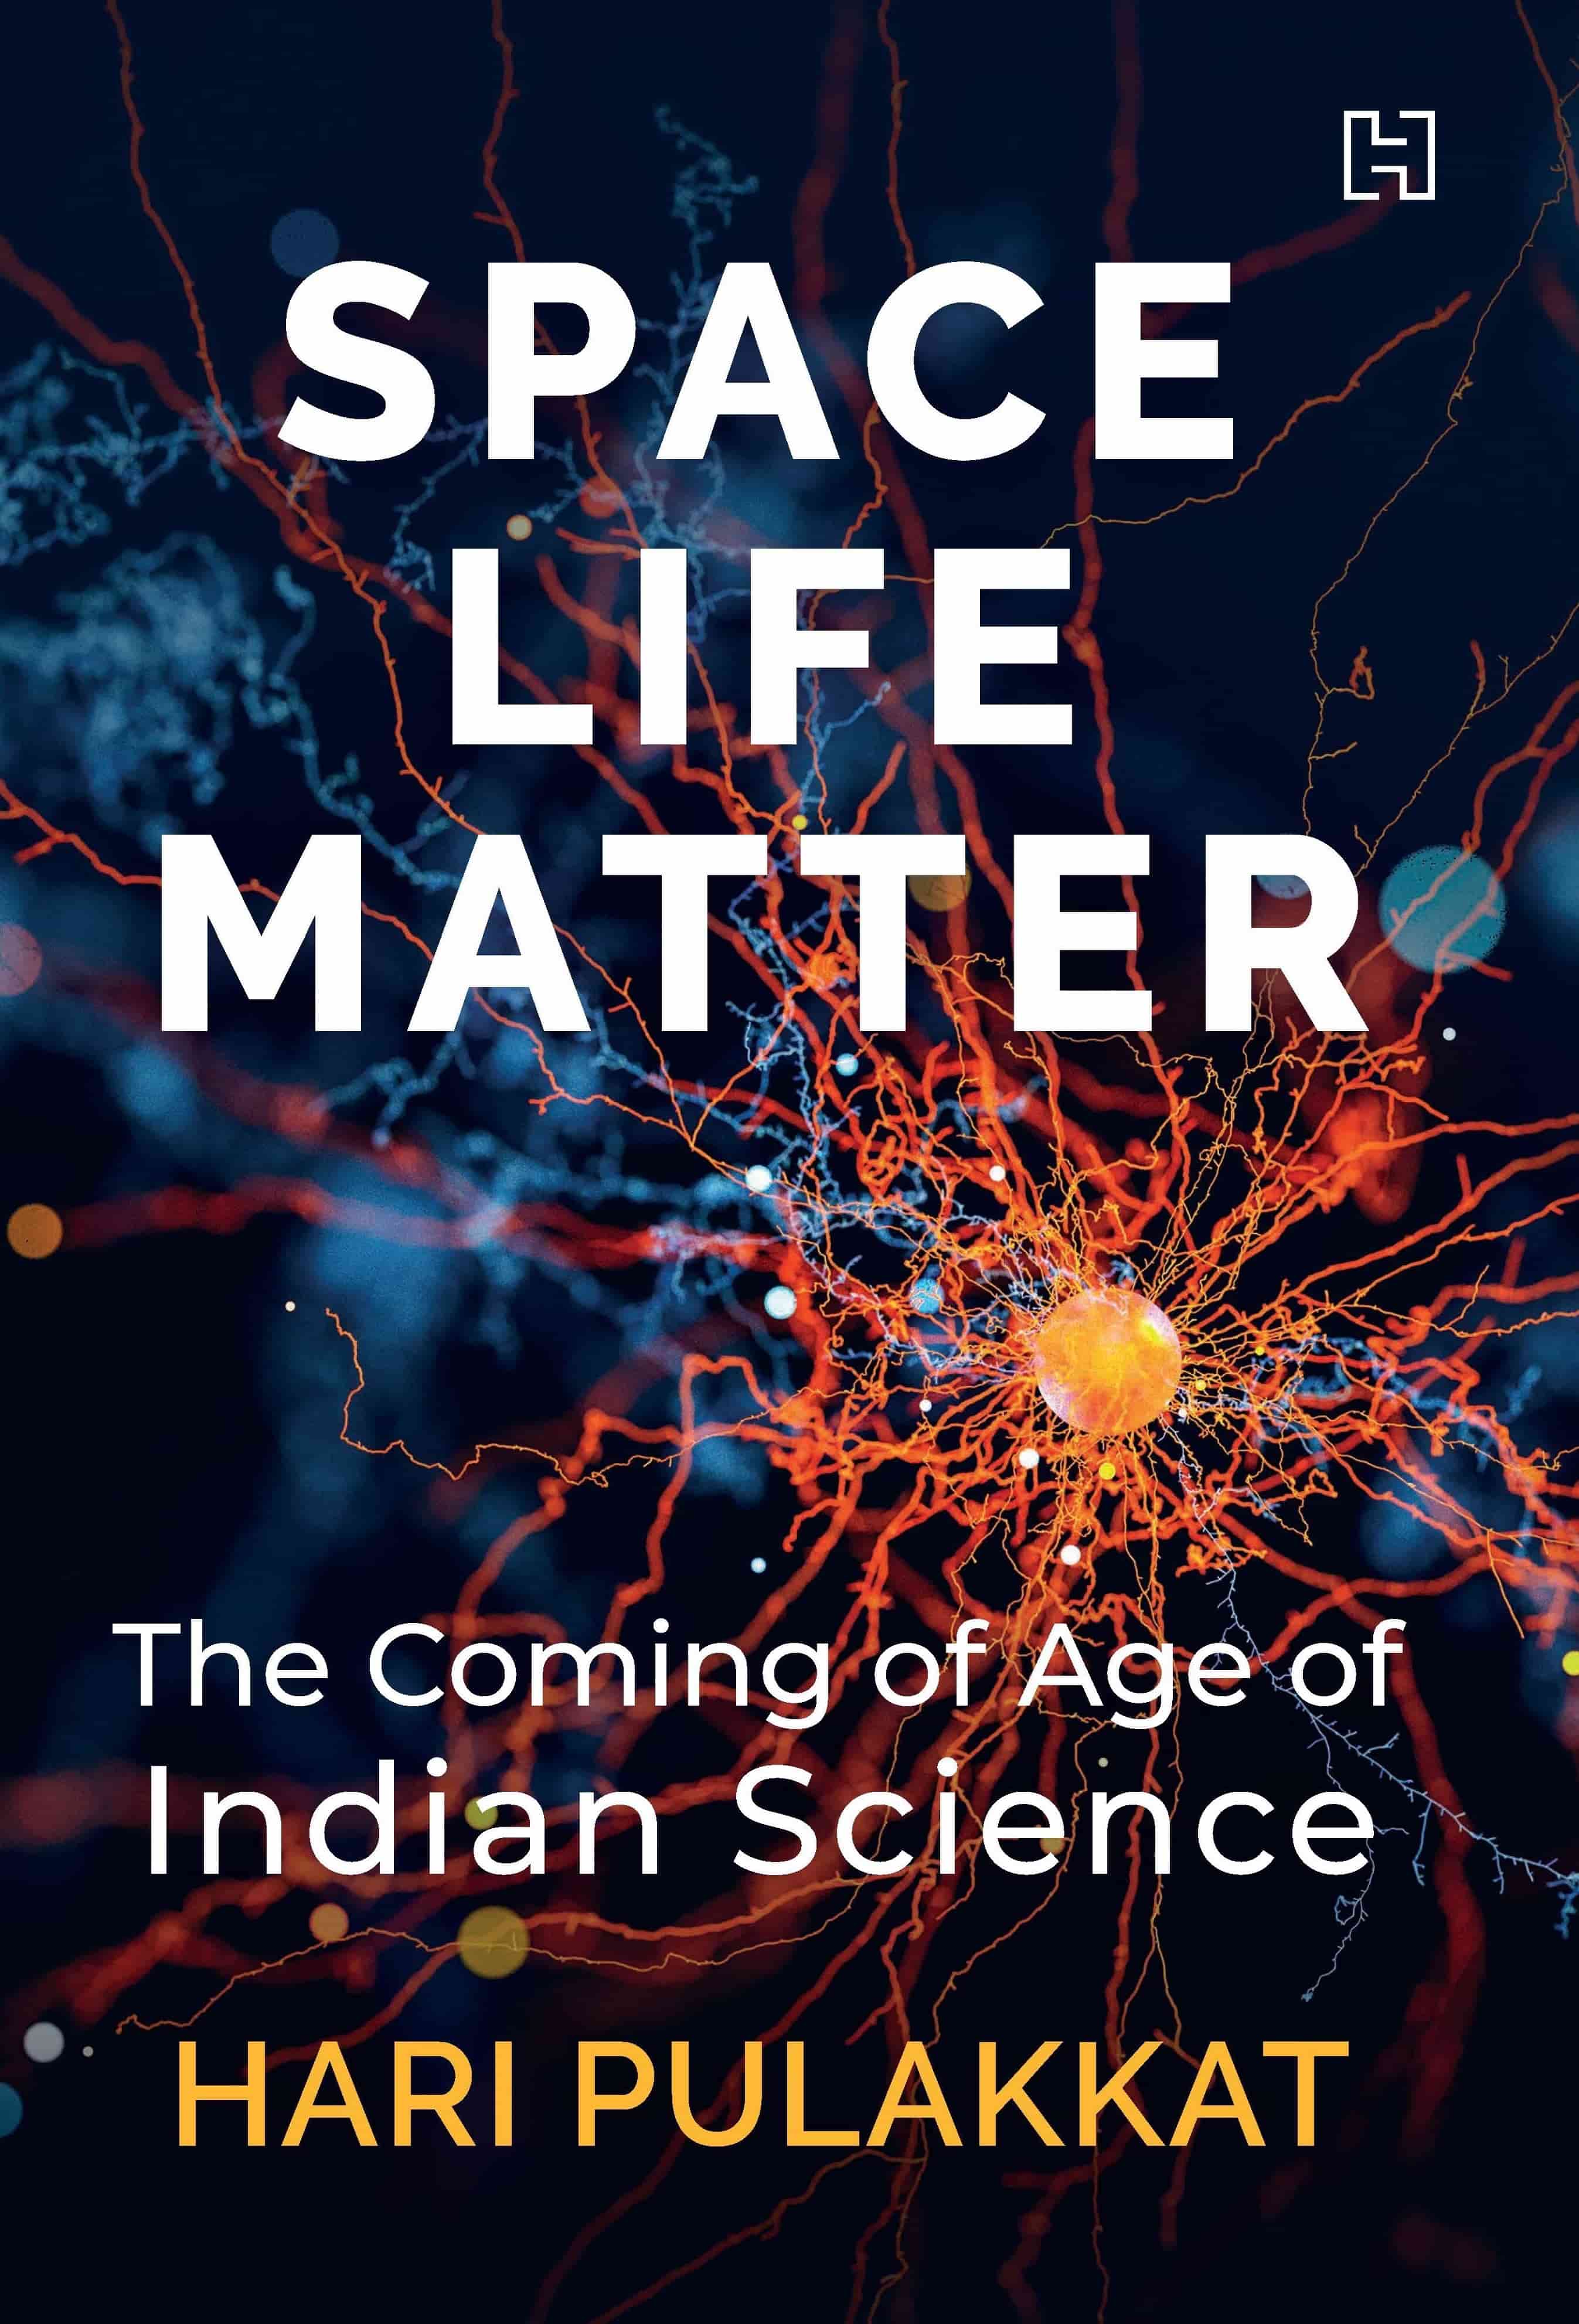 Space-Life-Matter-hari-pulakkat-featured-image